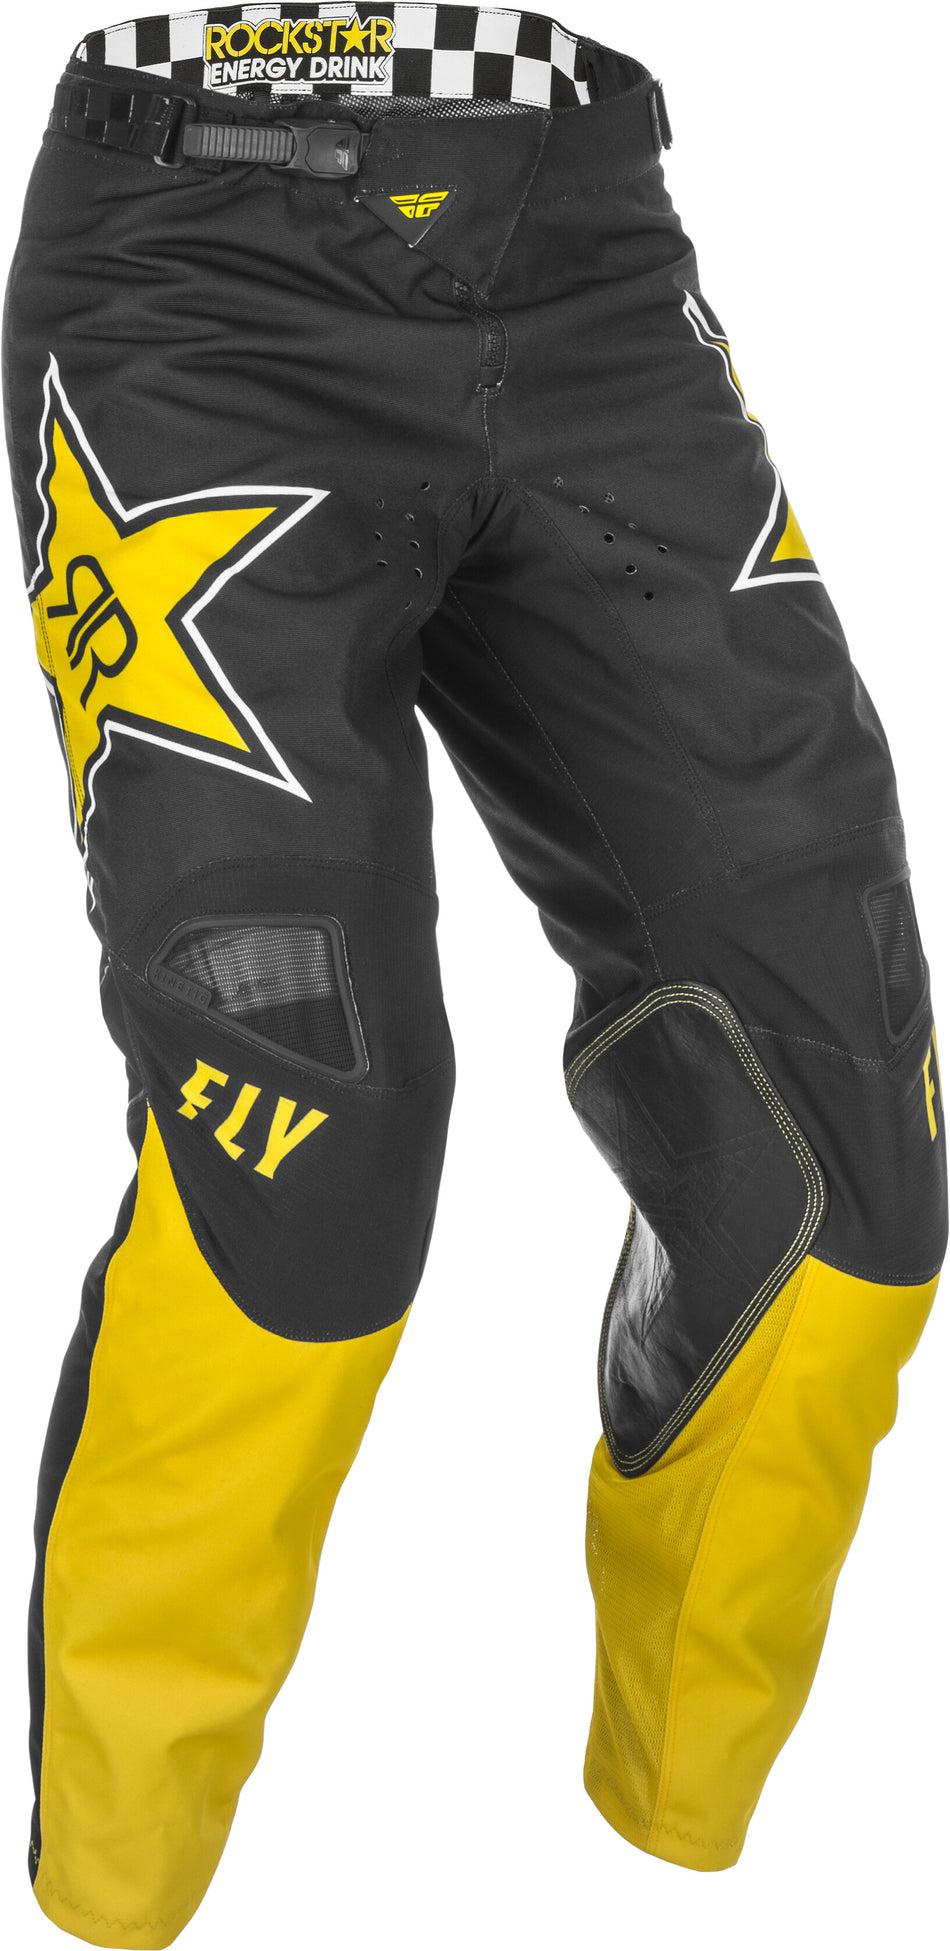 FLY RACING Kinetic Rockstar Pants Yellow/Black Sz 36 374-02336